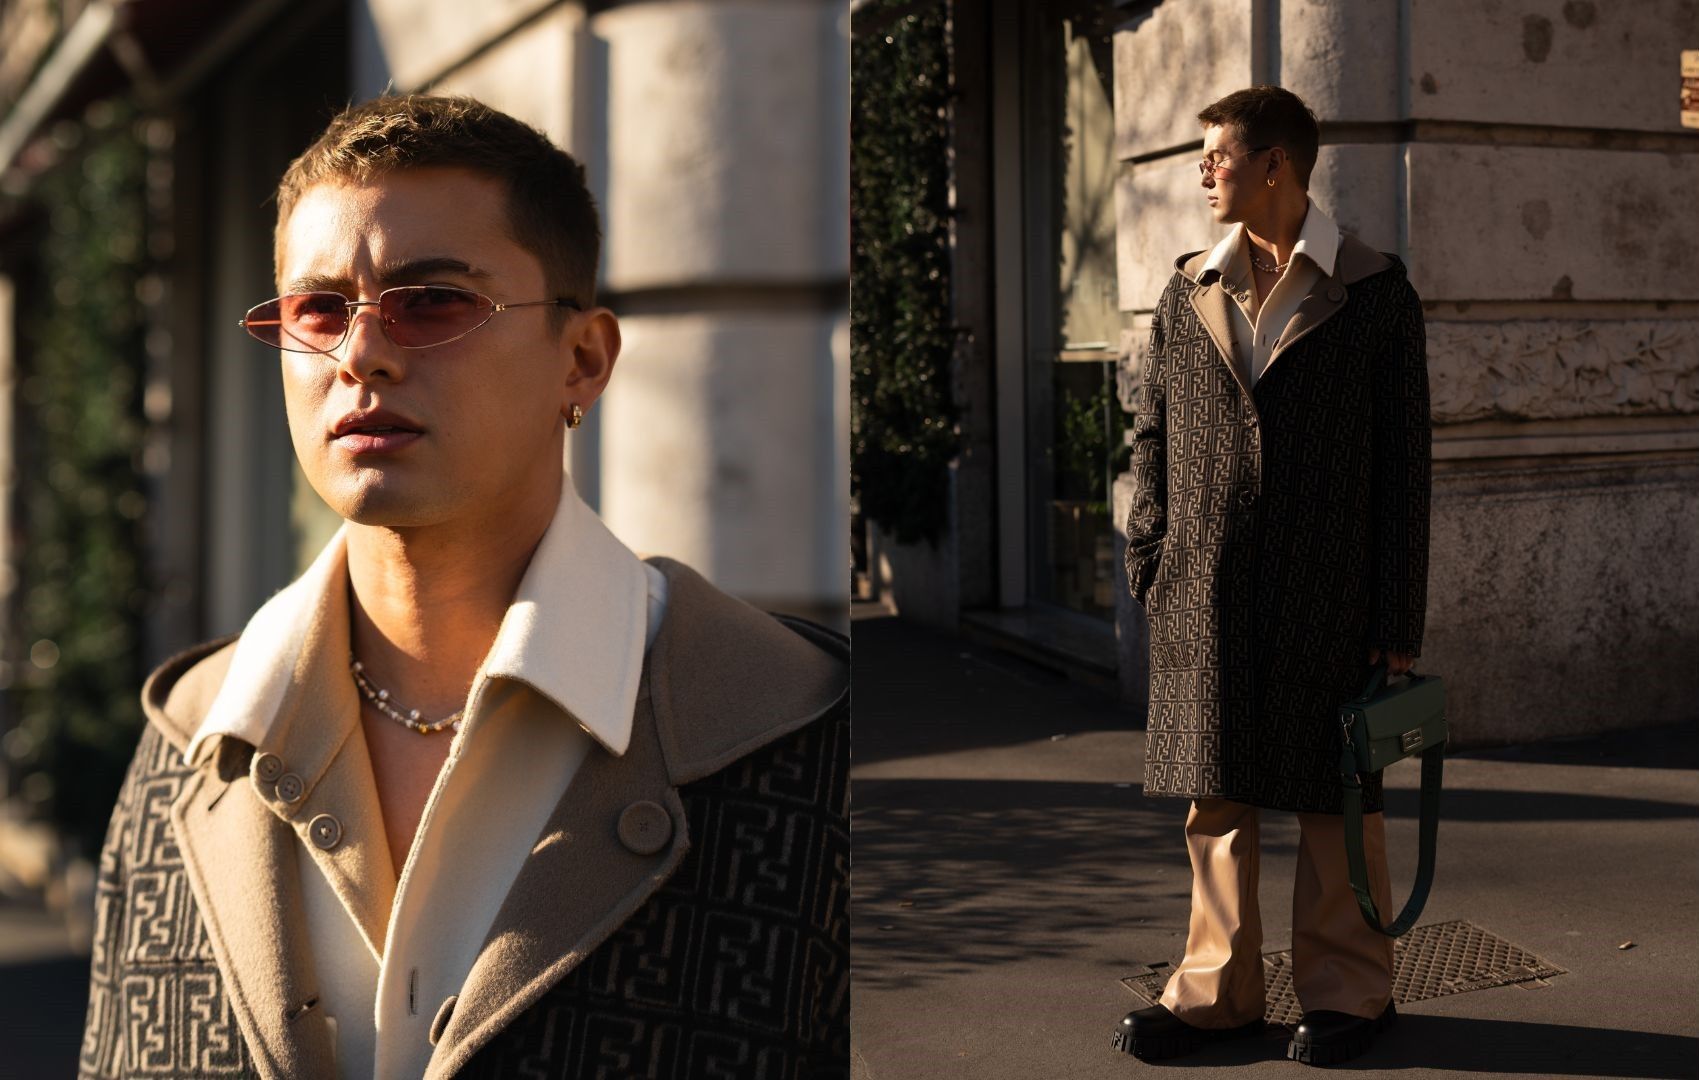 James Reid debuts at Milan Fashion Week with creative direction by girlfriend Issa Pressman